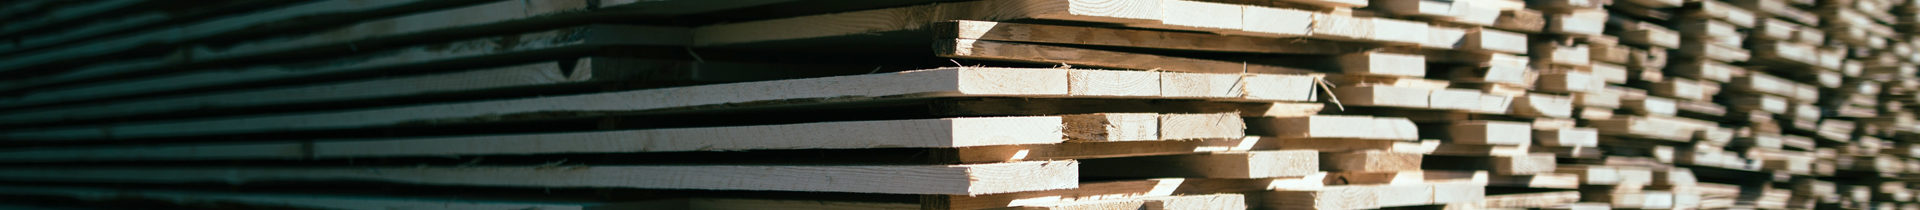 piles of wood lumber